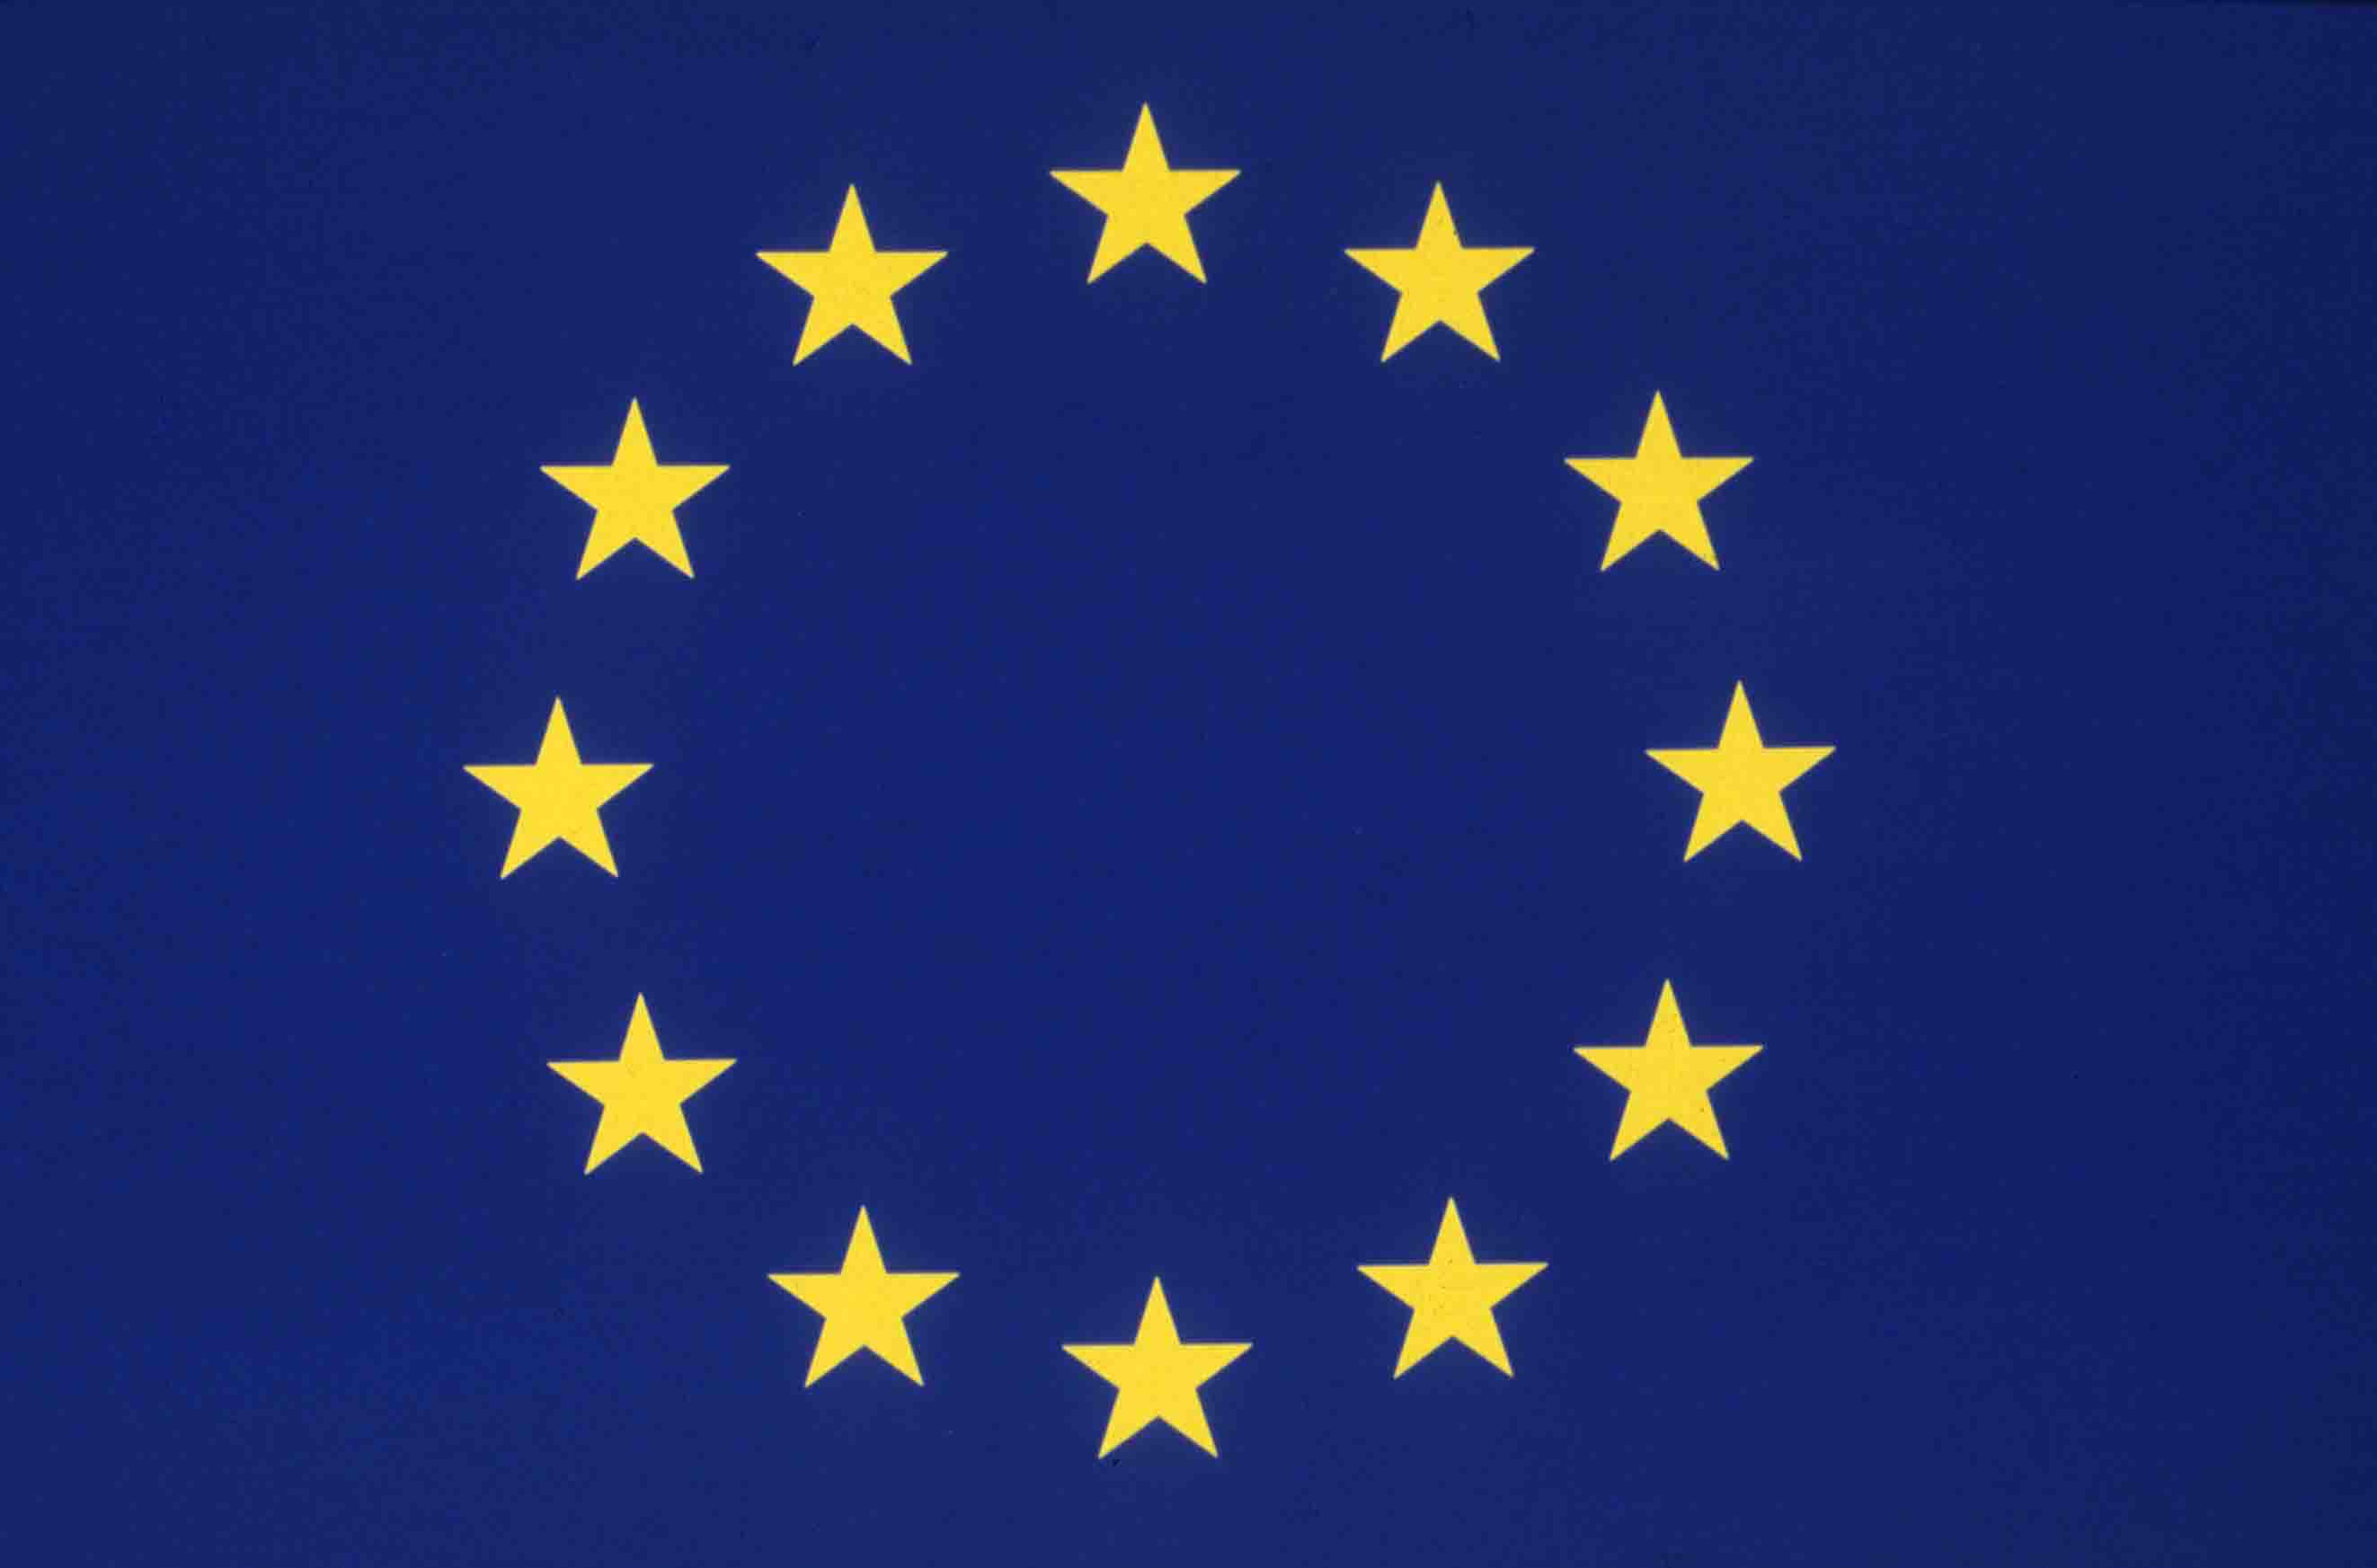  European  Union Flags  HD  Wallpaper Background Image 